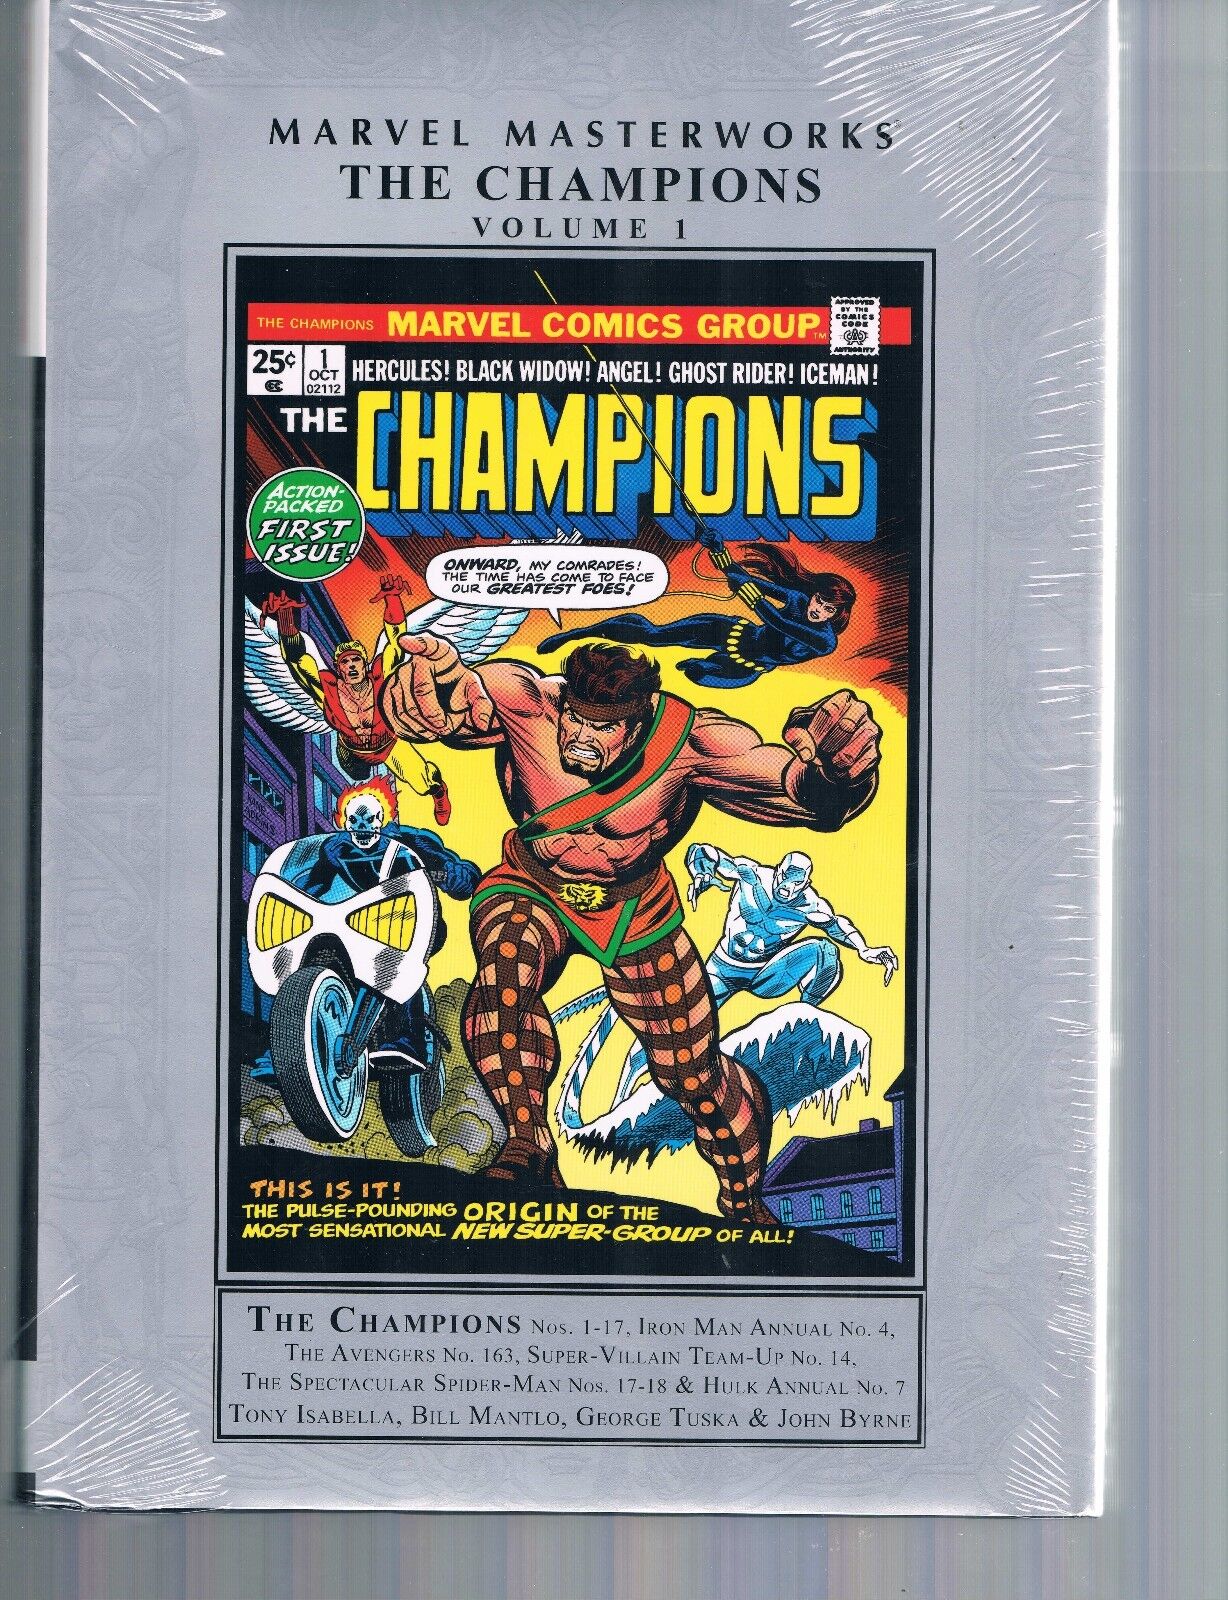 The Champions Marvel Masterworks Vol 1 by Isabella Mantlo Tuska & more HC 2016